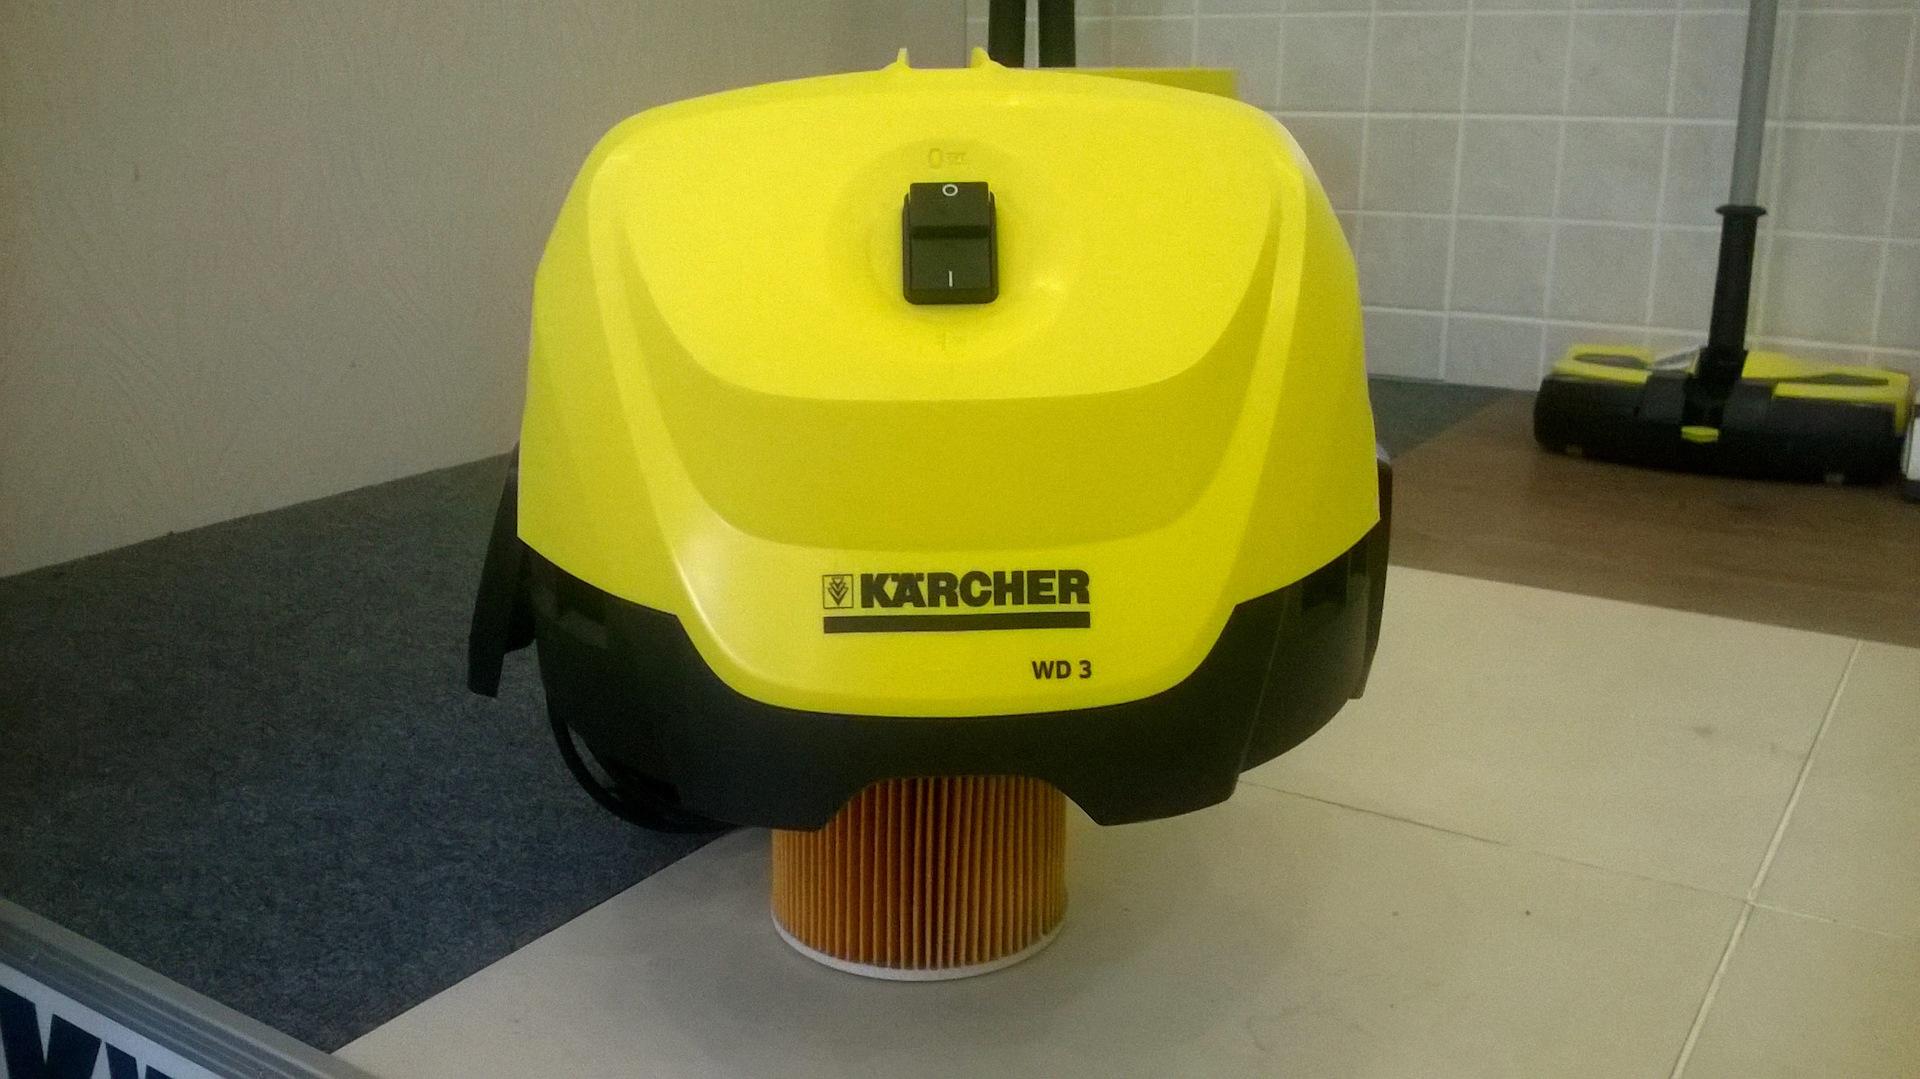 Karcher wd 3 v 15. Karcher wd2 Plus циклон. Пылесос Karcher WD 2 Plus. Wd3300 Karcher. Хозяйственный пылесос Karcher WD 2.